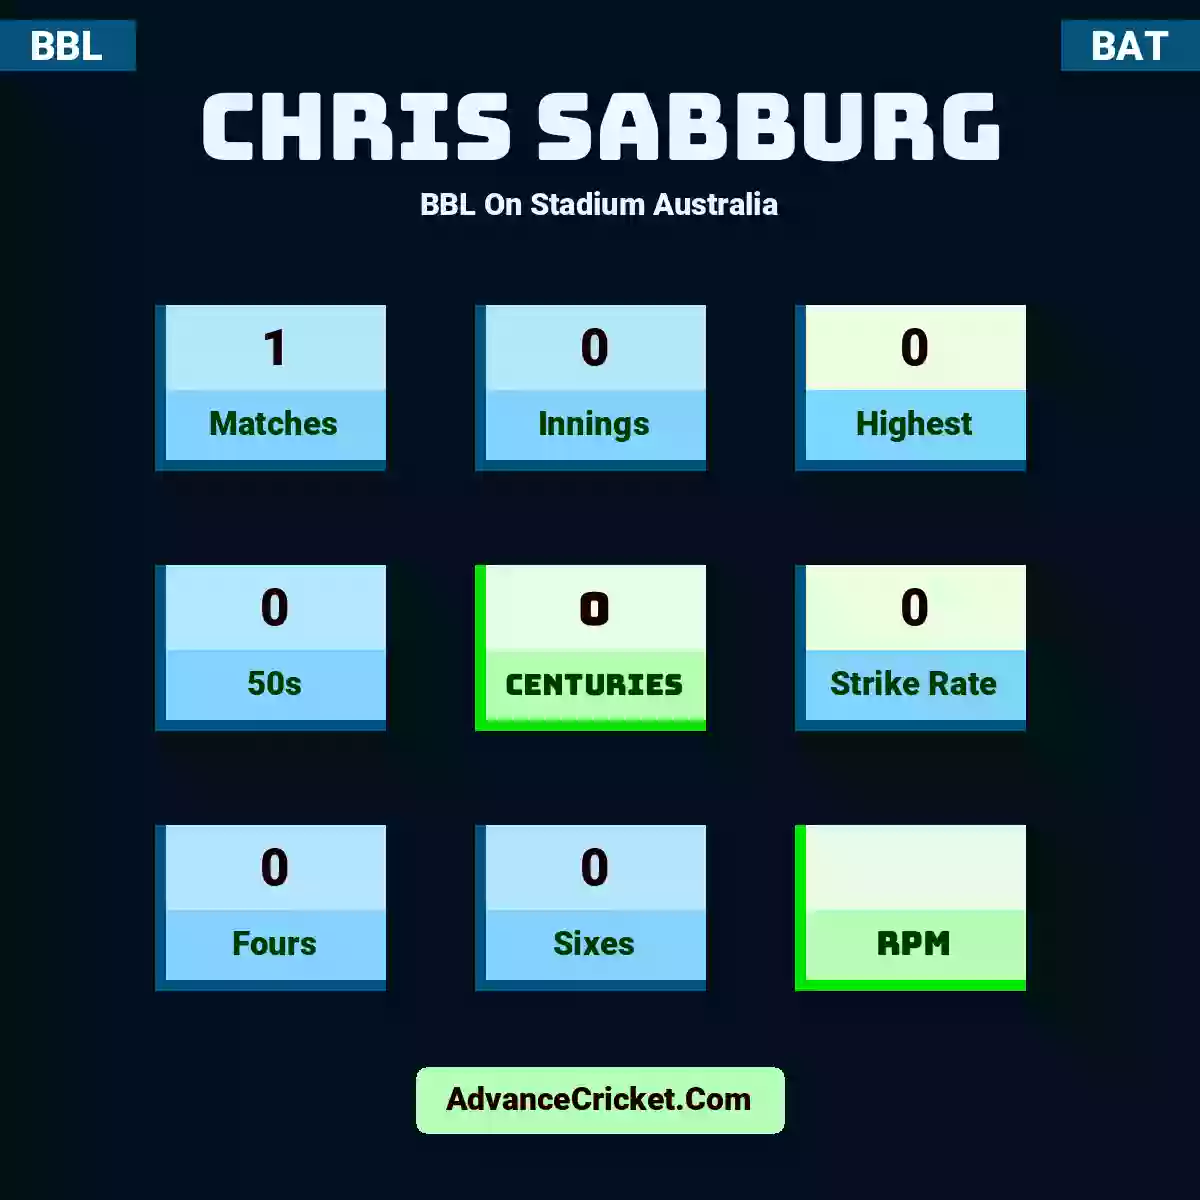 Chris Sabburg BBL  On Stadium Australia, Chris Sabburg played 1 matches, scored 0 runs as highest, 0 half-centuries, and 0 centuries, with a strike rate of 0. C.Sabburg hit 0 fours and 0 sixes.